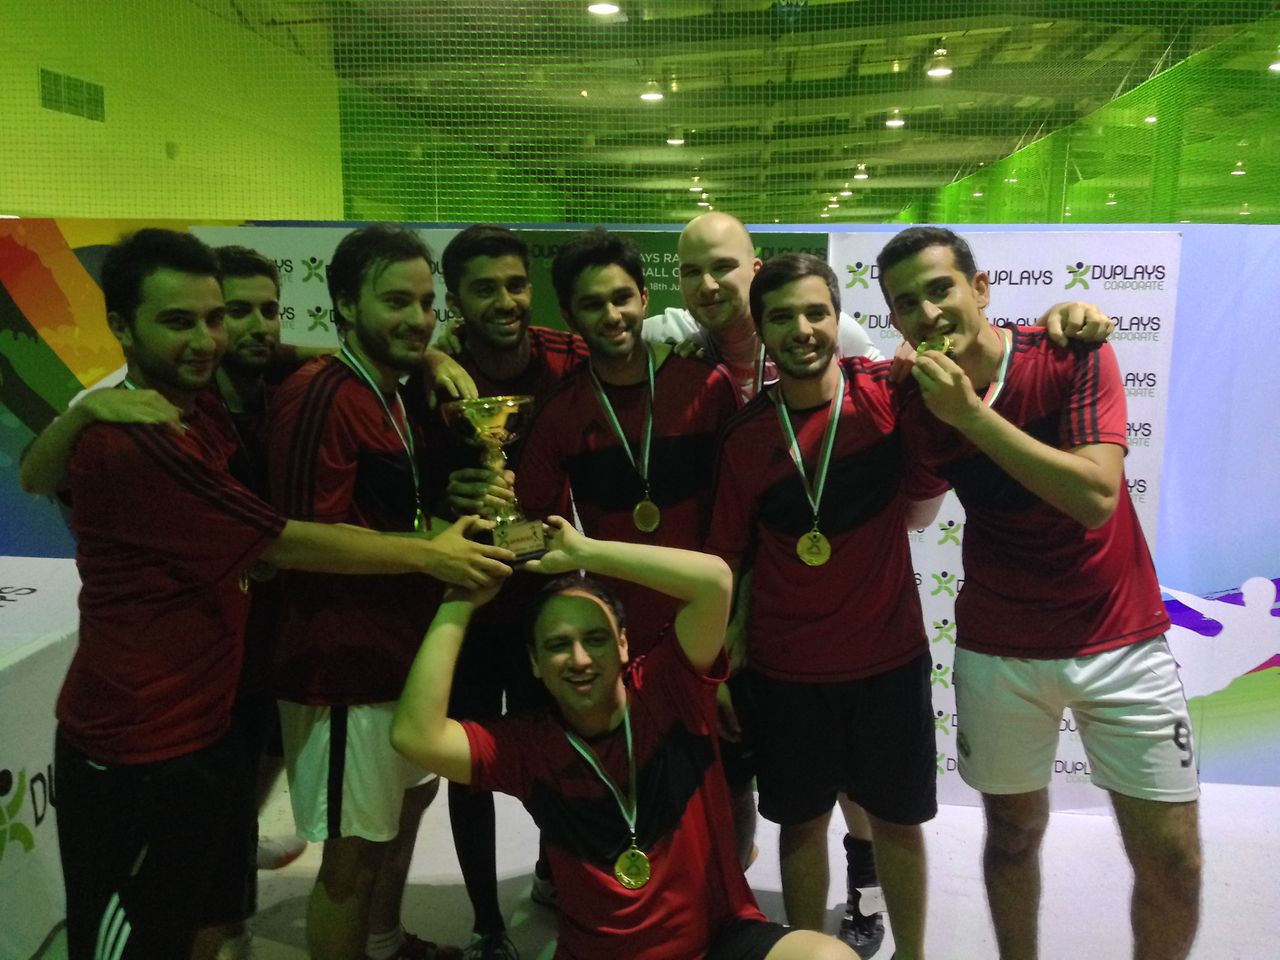 The winning Henkel team at the DUPLAYS Ramadan Football Cup 2014 Dubai